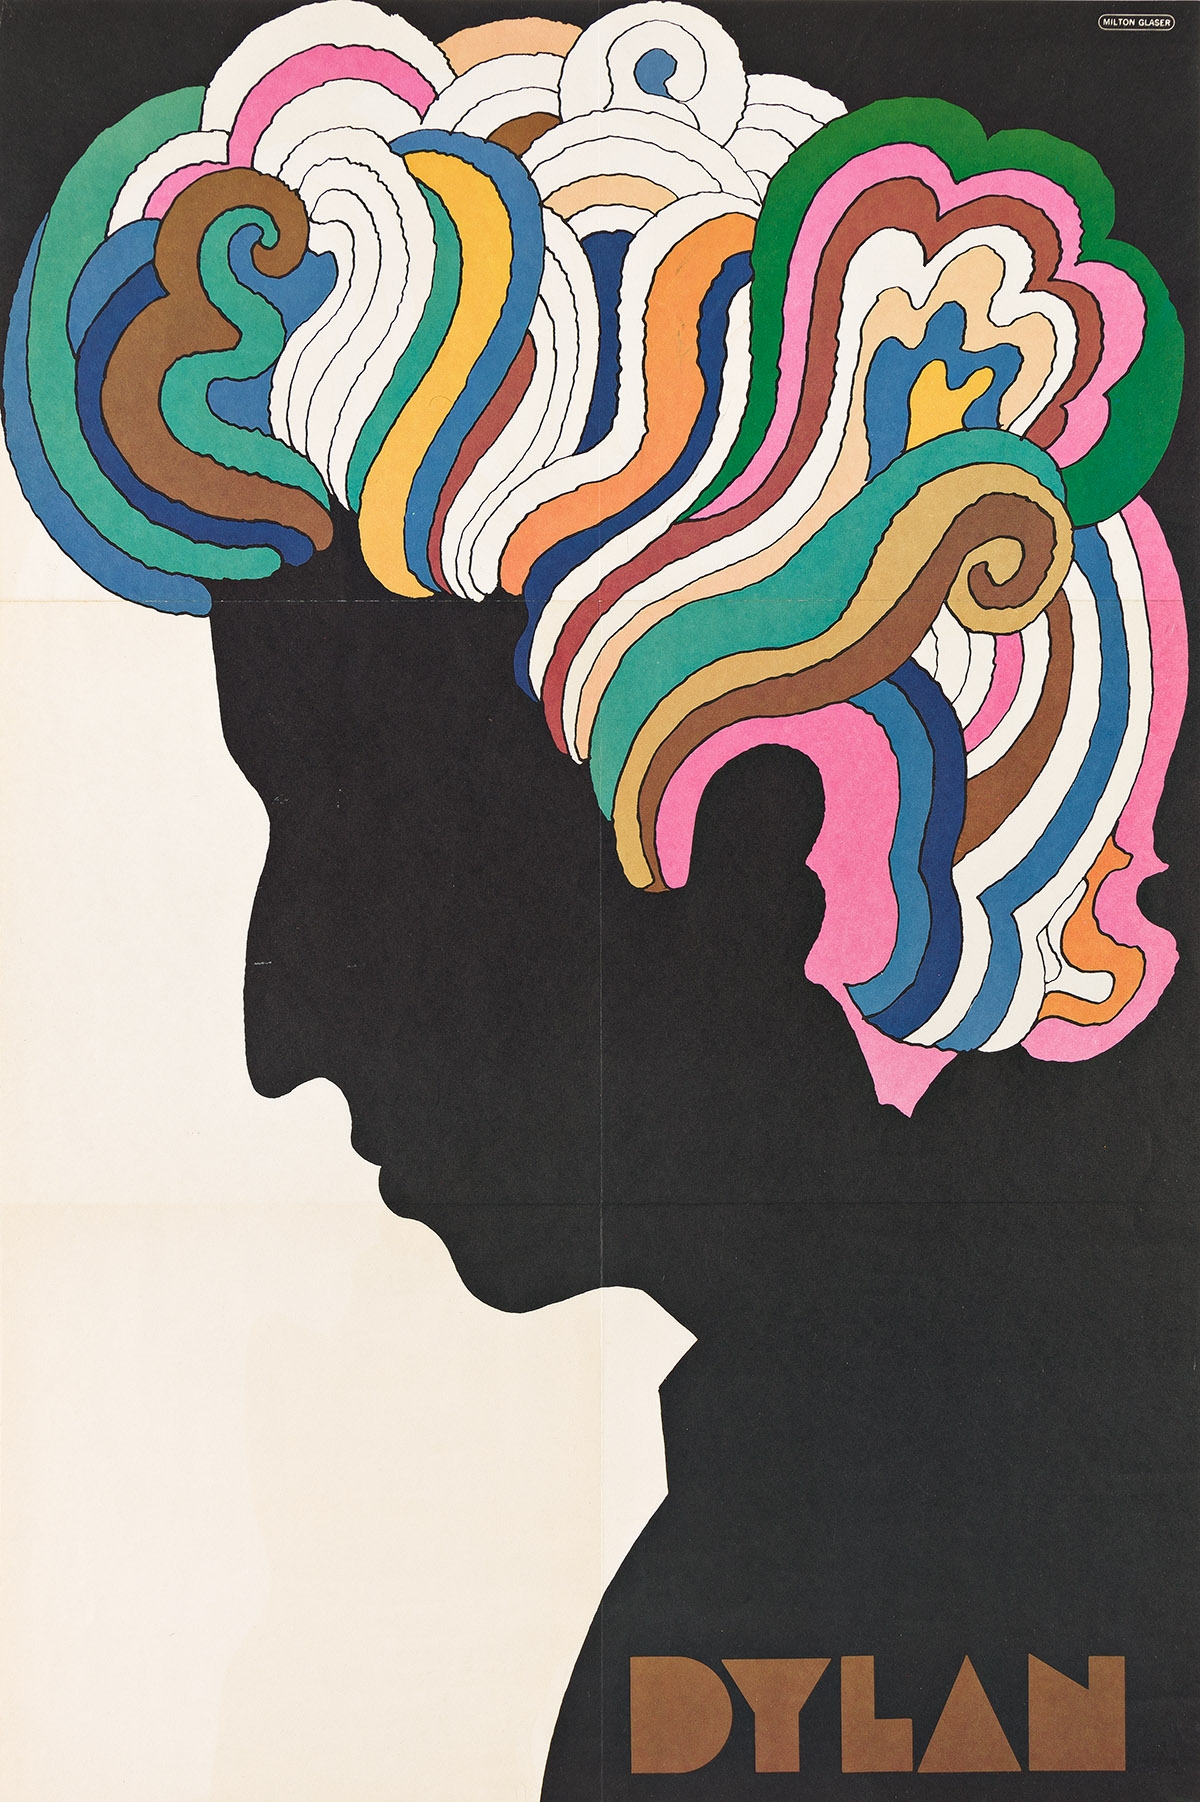 BOB DYLAN. 1966 by Milton Glaser, 1966